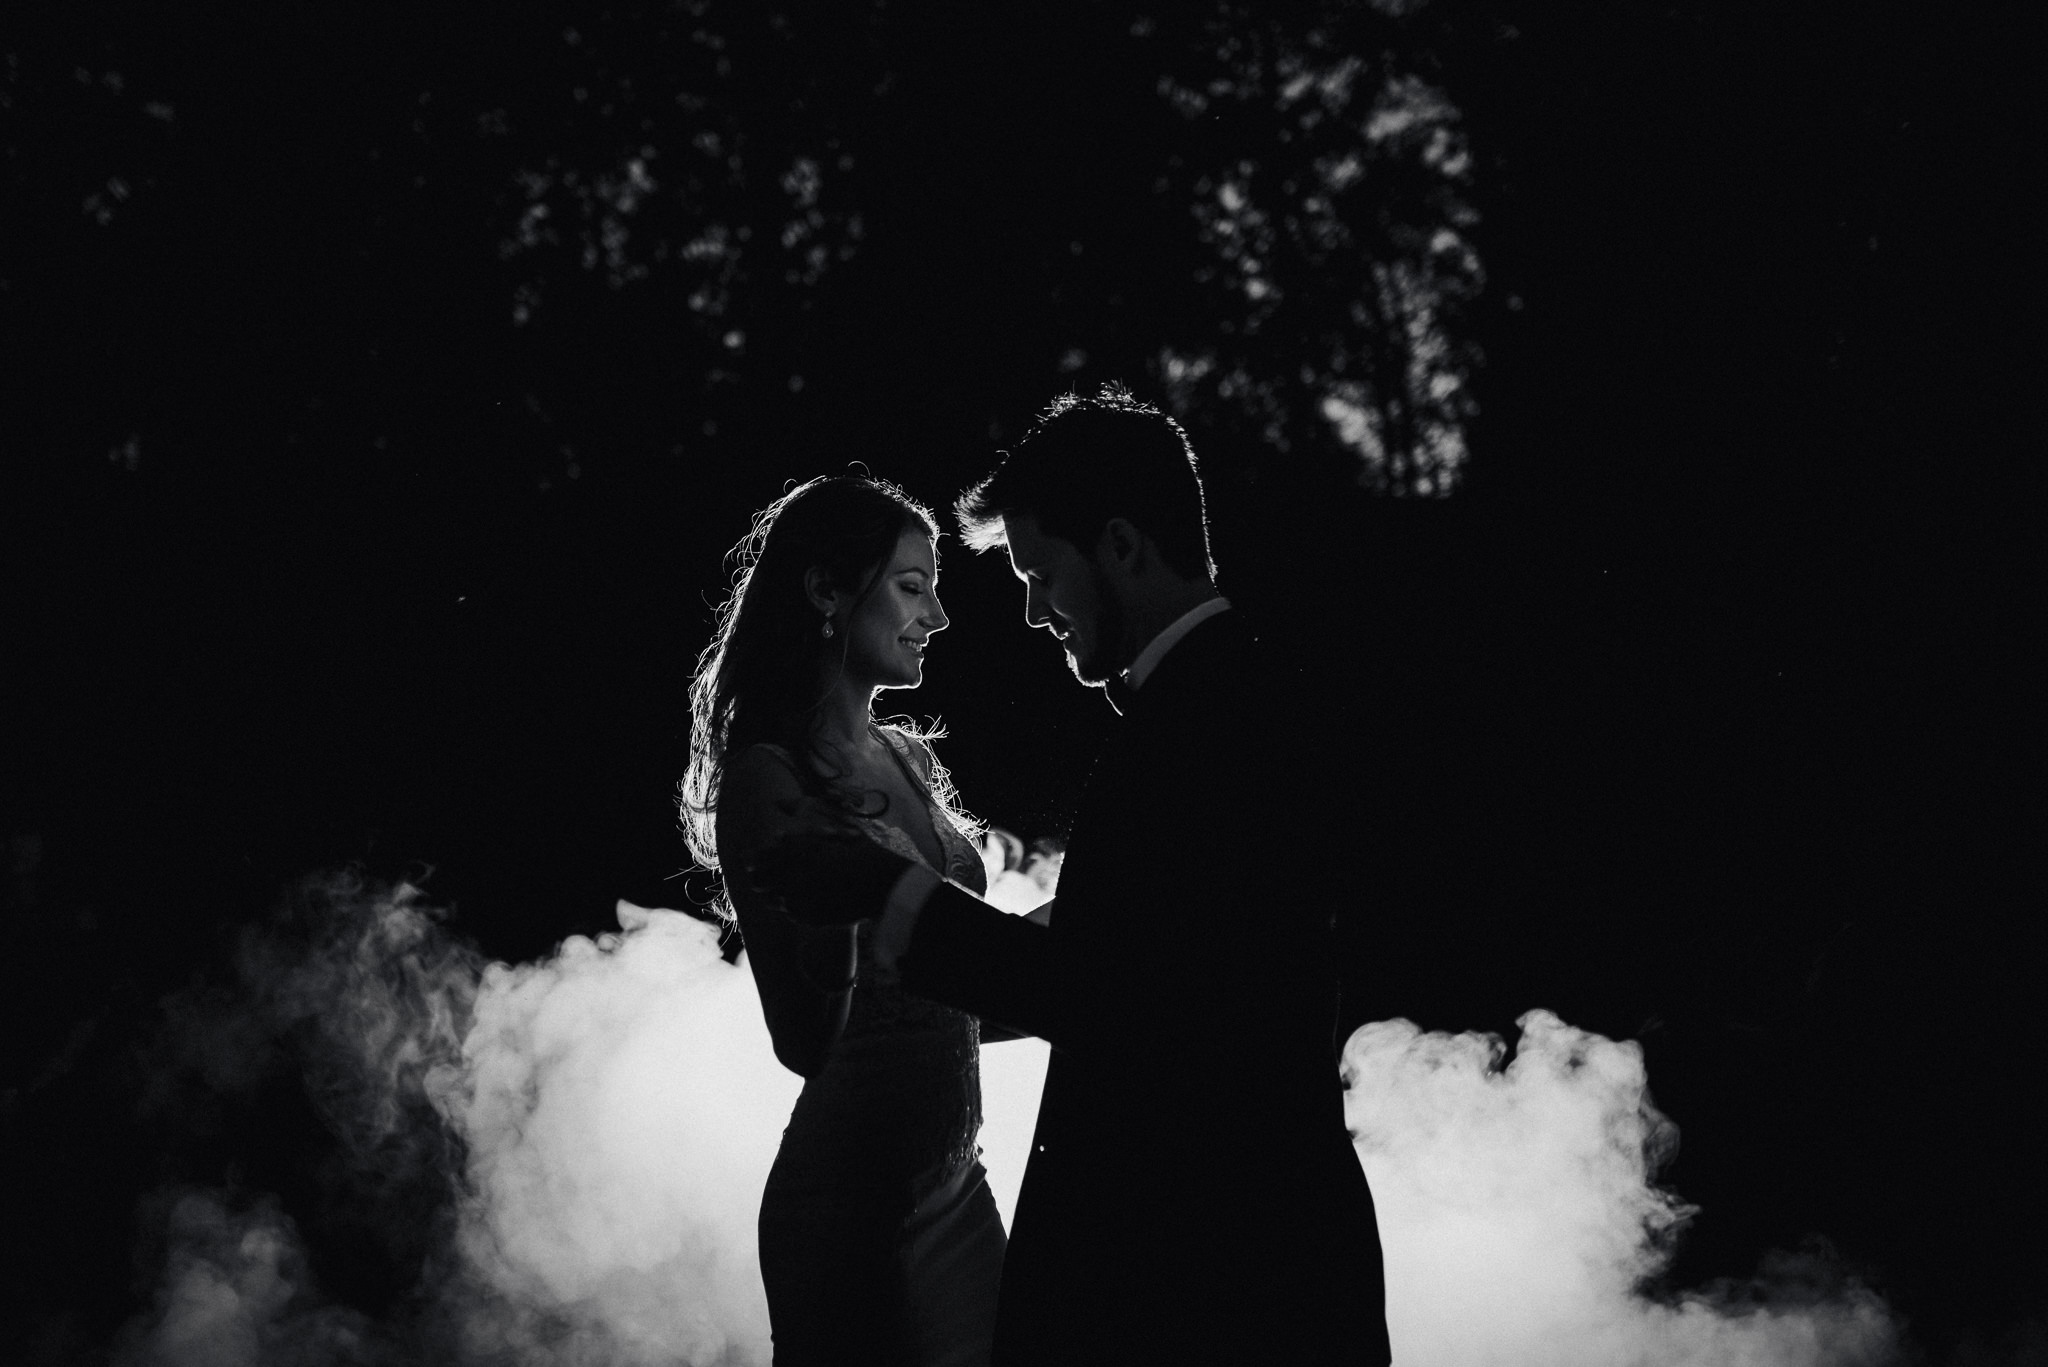 The Leddas Wedding Photography - Wedding Portfolio